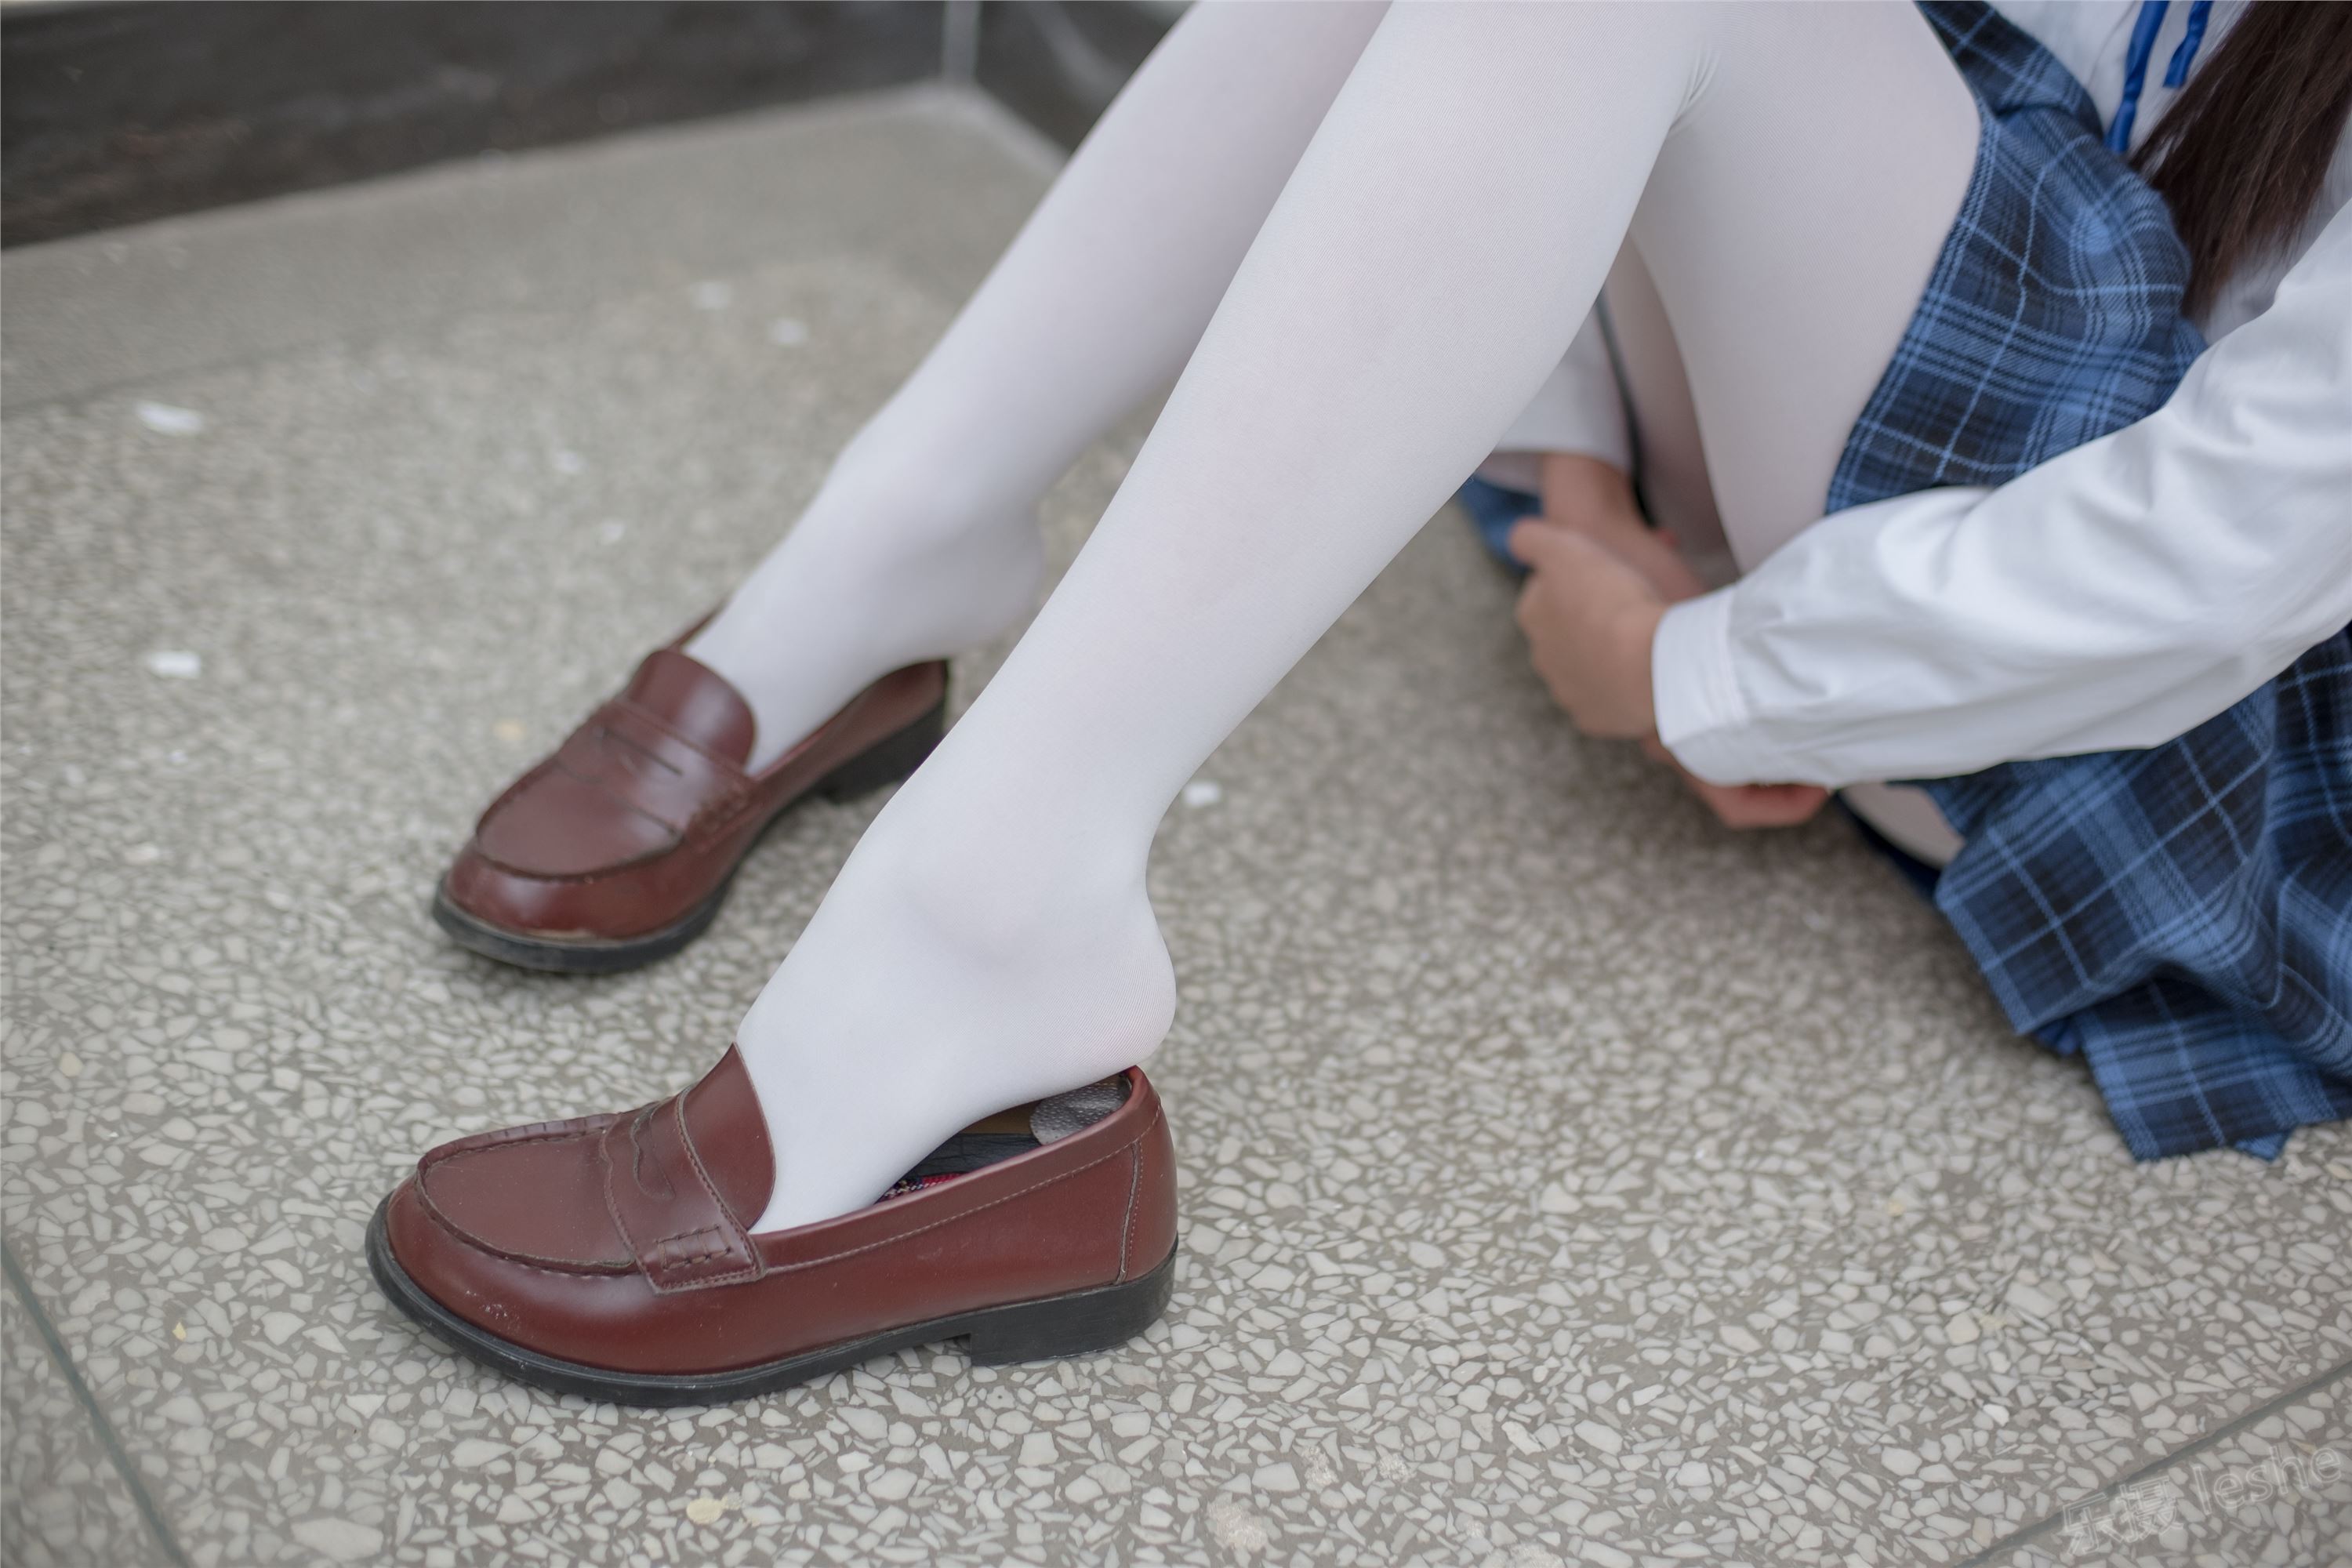 [Sen Luo financial group] rolice foot photo r15-044 white silk schoolgirl